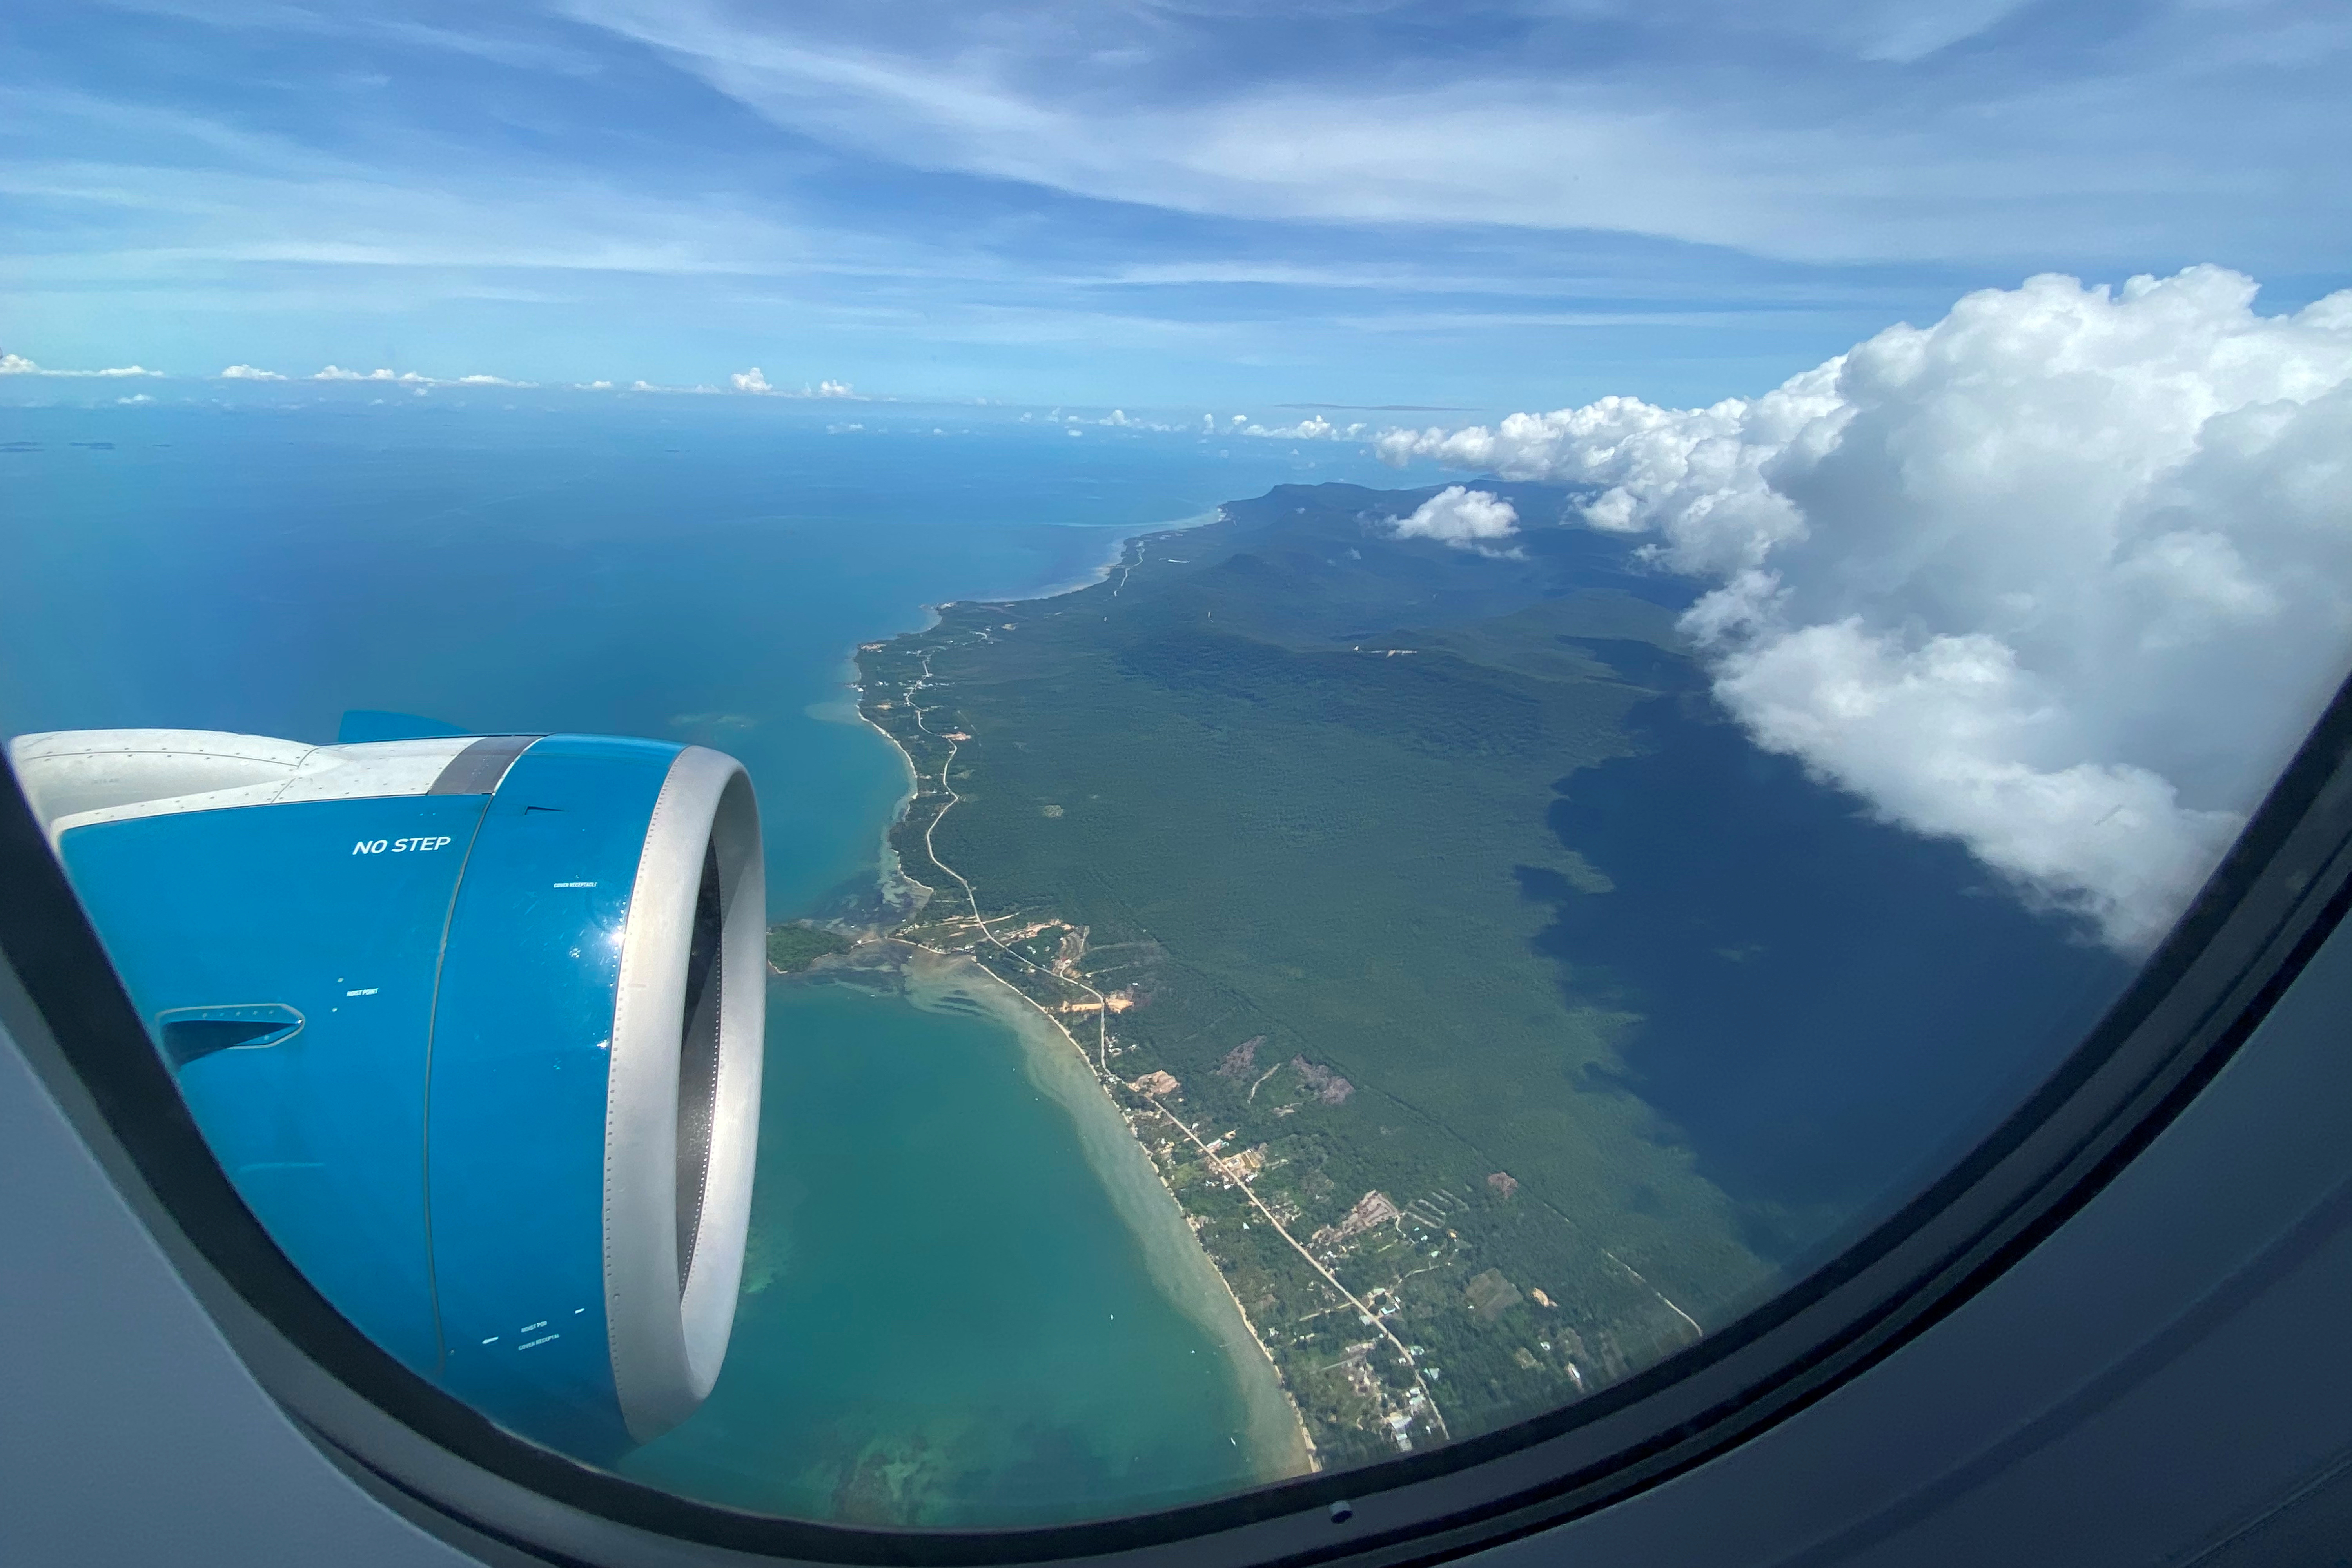 Phu Quoc resort island, Vietnam, is seen from an aeroplane